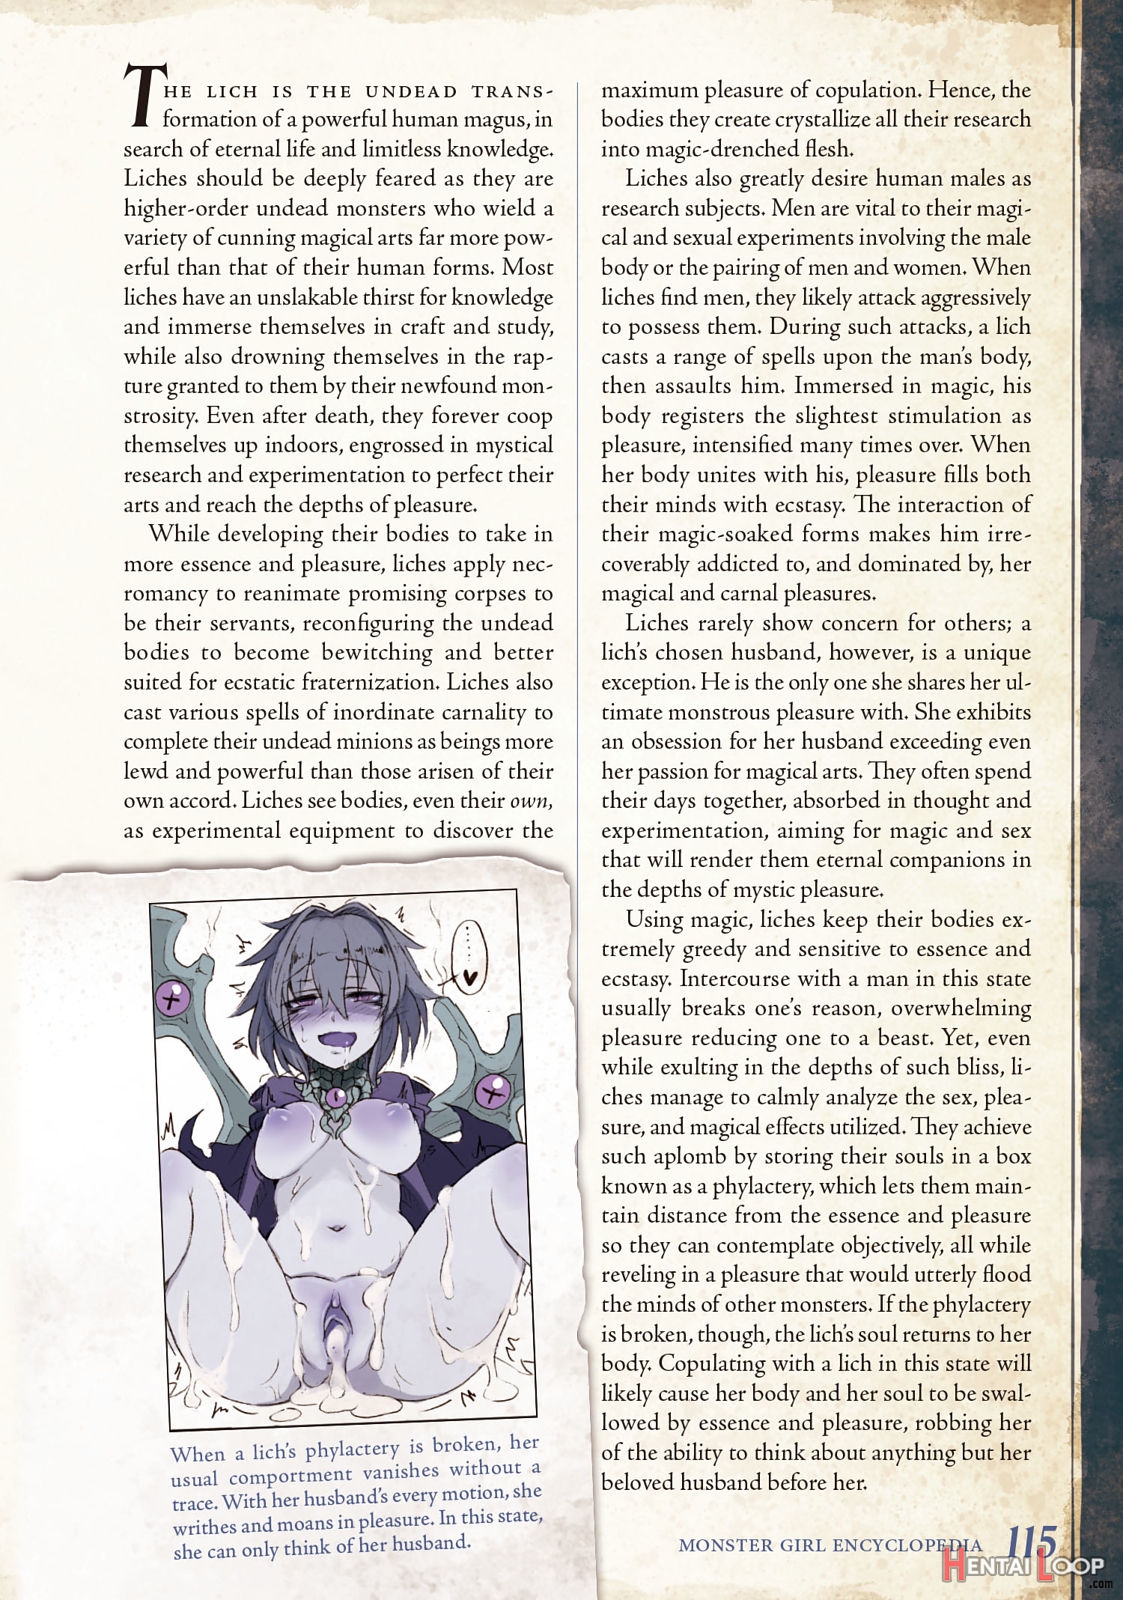 Monster Girl Encyclopedia Vol. 2 page 116